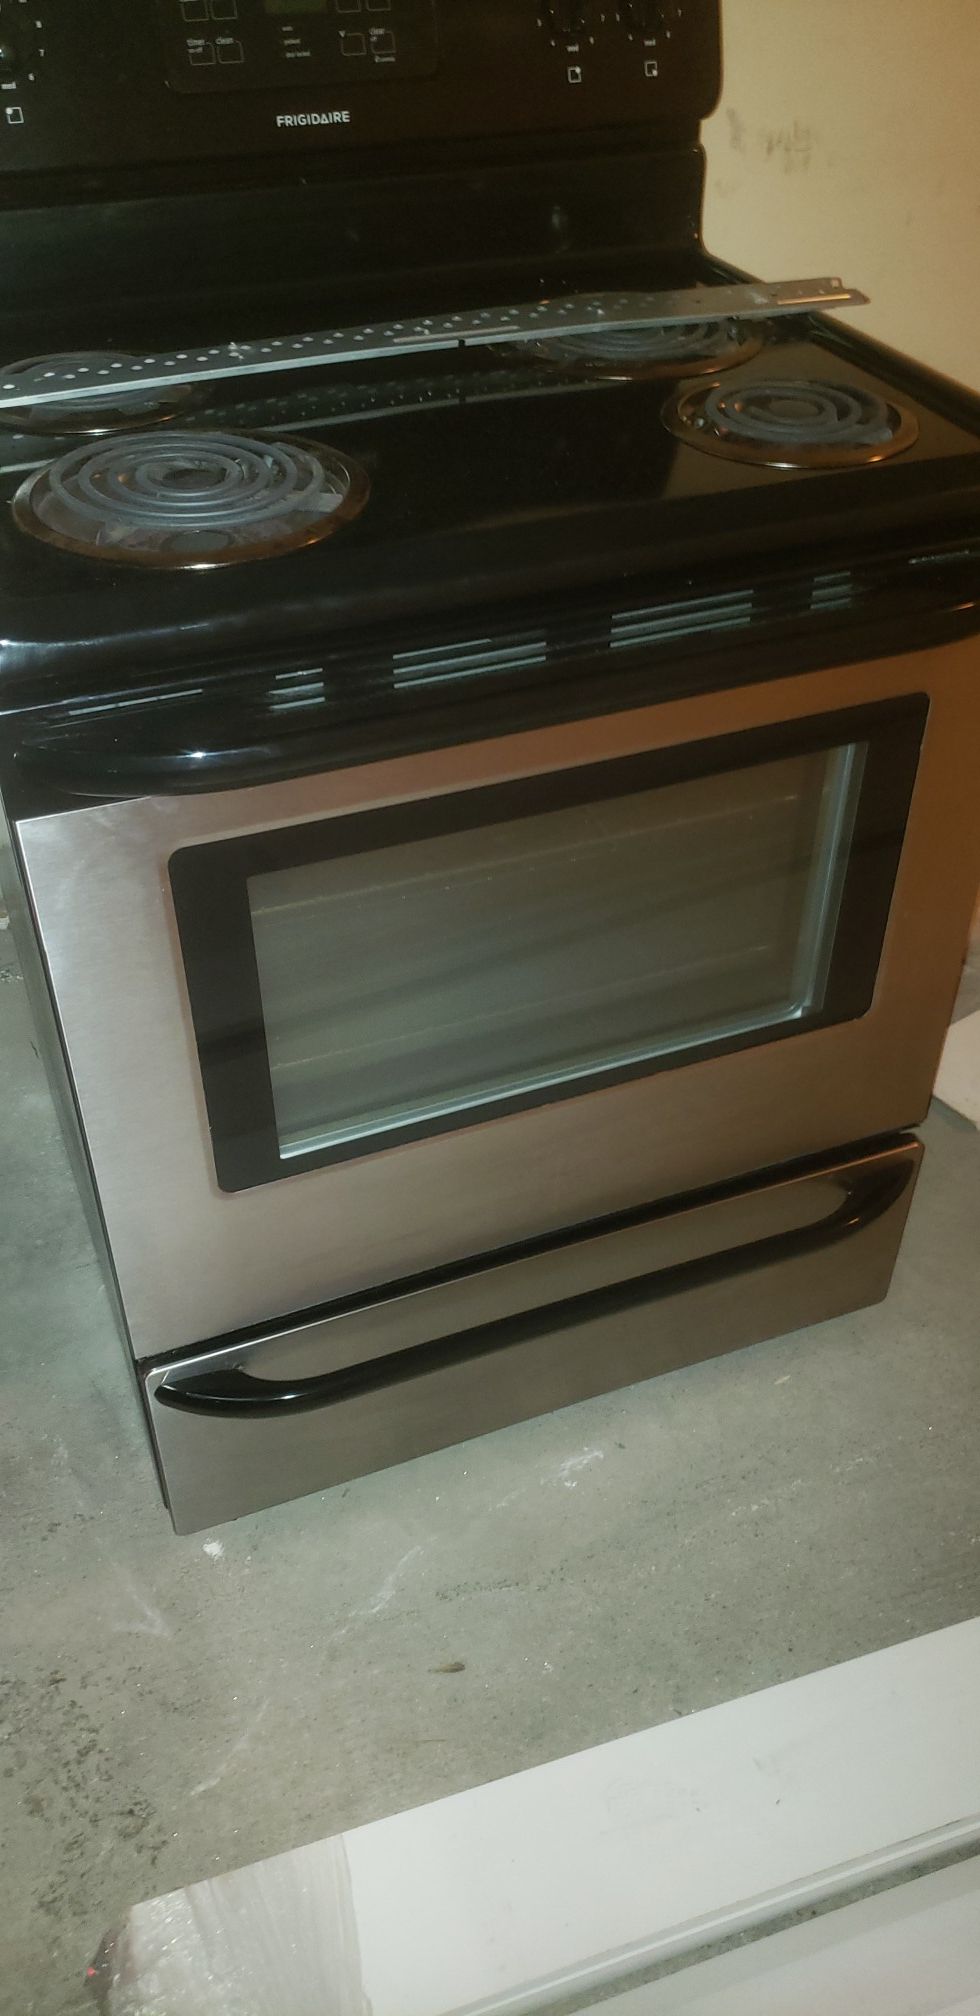 Stove dishwasher and microwave